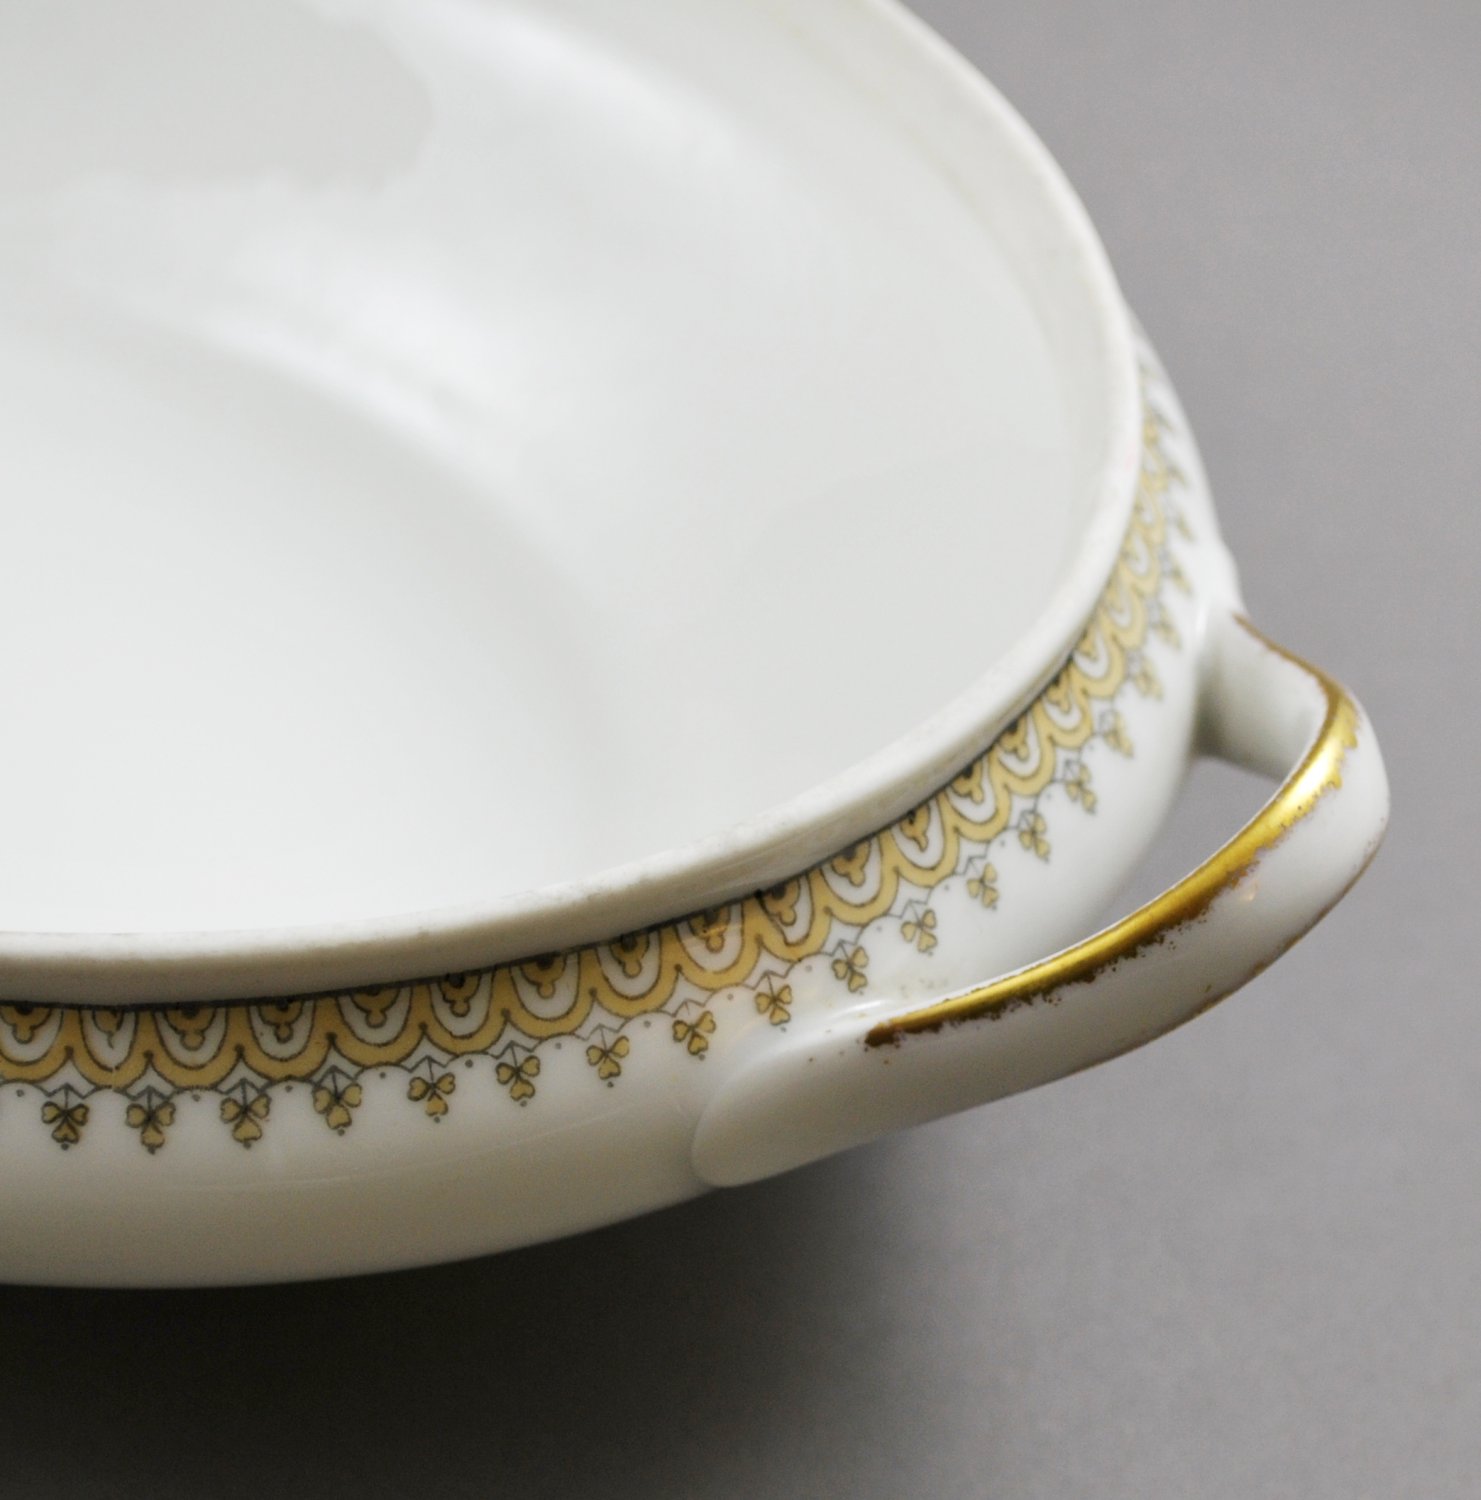 A. Lanternier Limoges Covered Vegetable Porcelain Dish with Gold Drape Trim